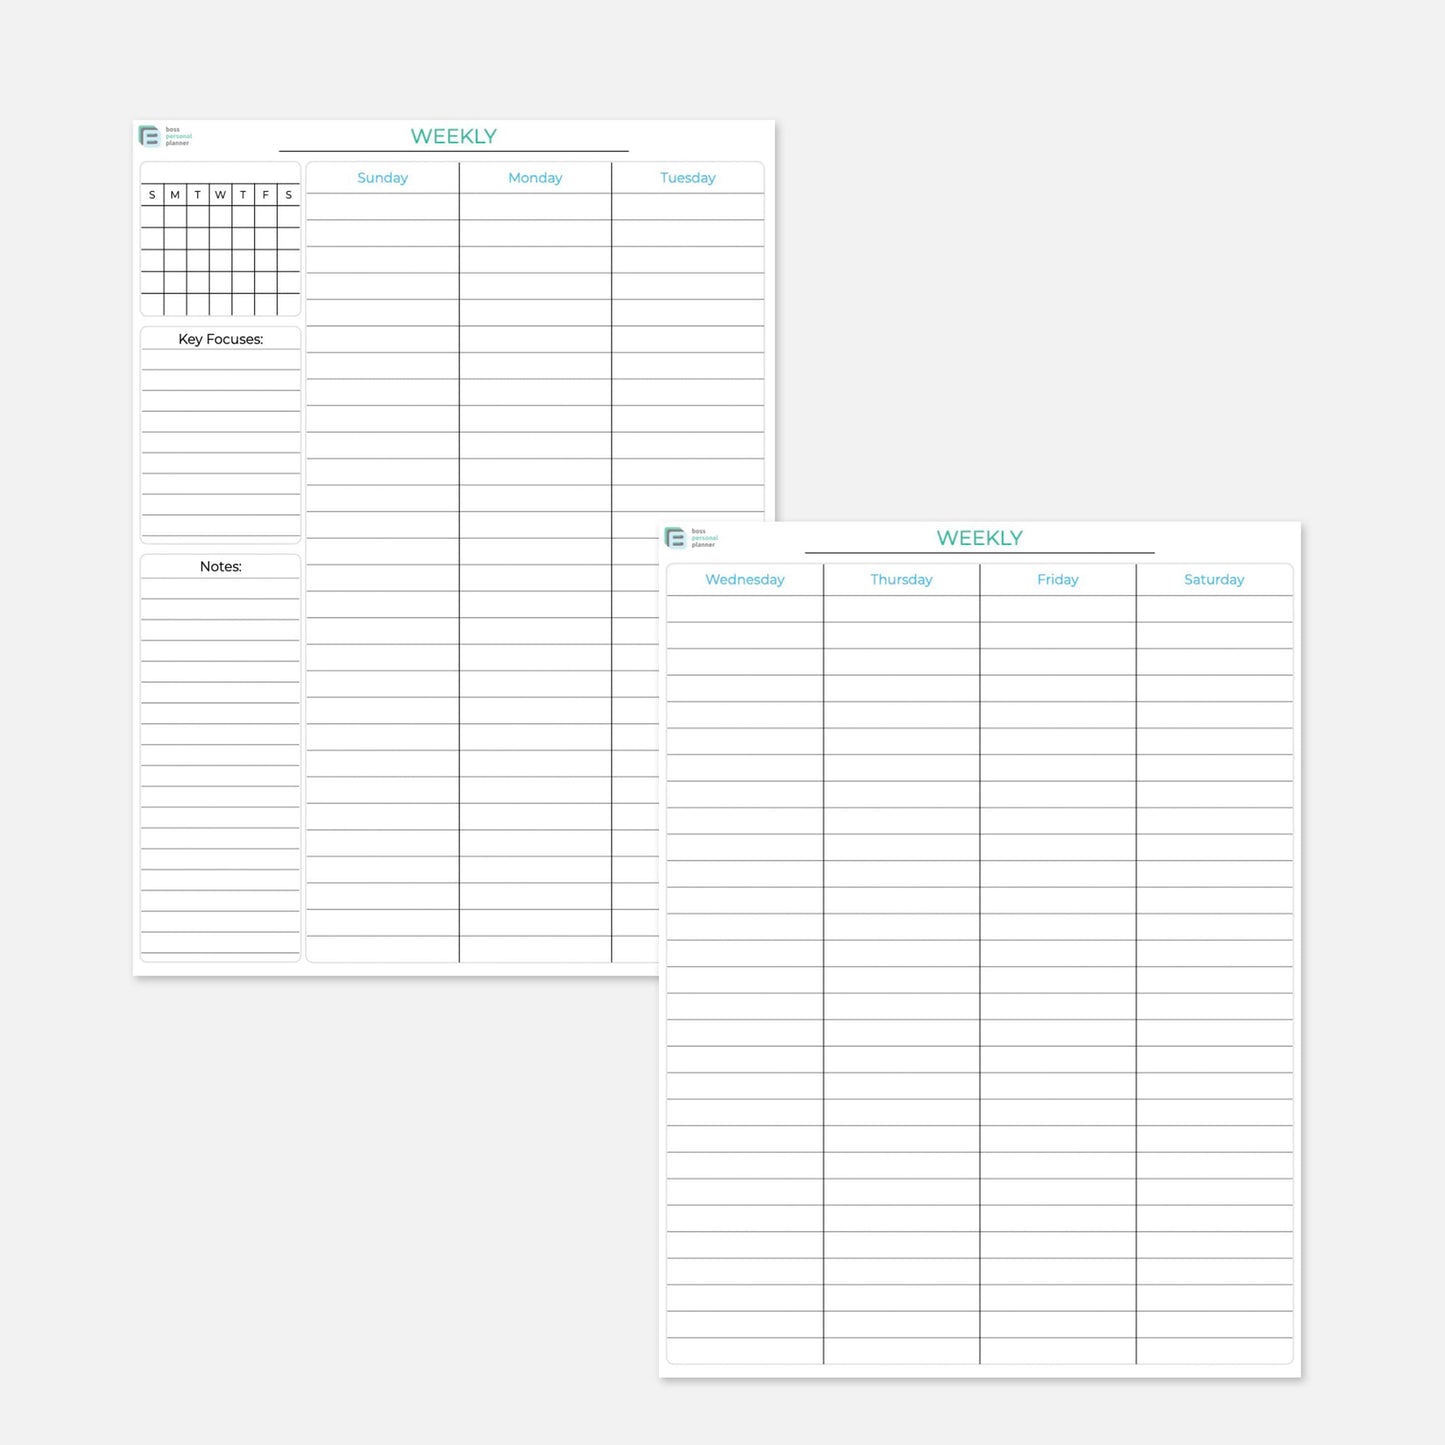 Printable 100 Day Planner PDF